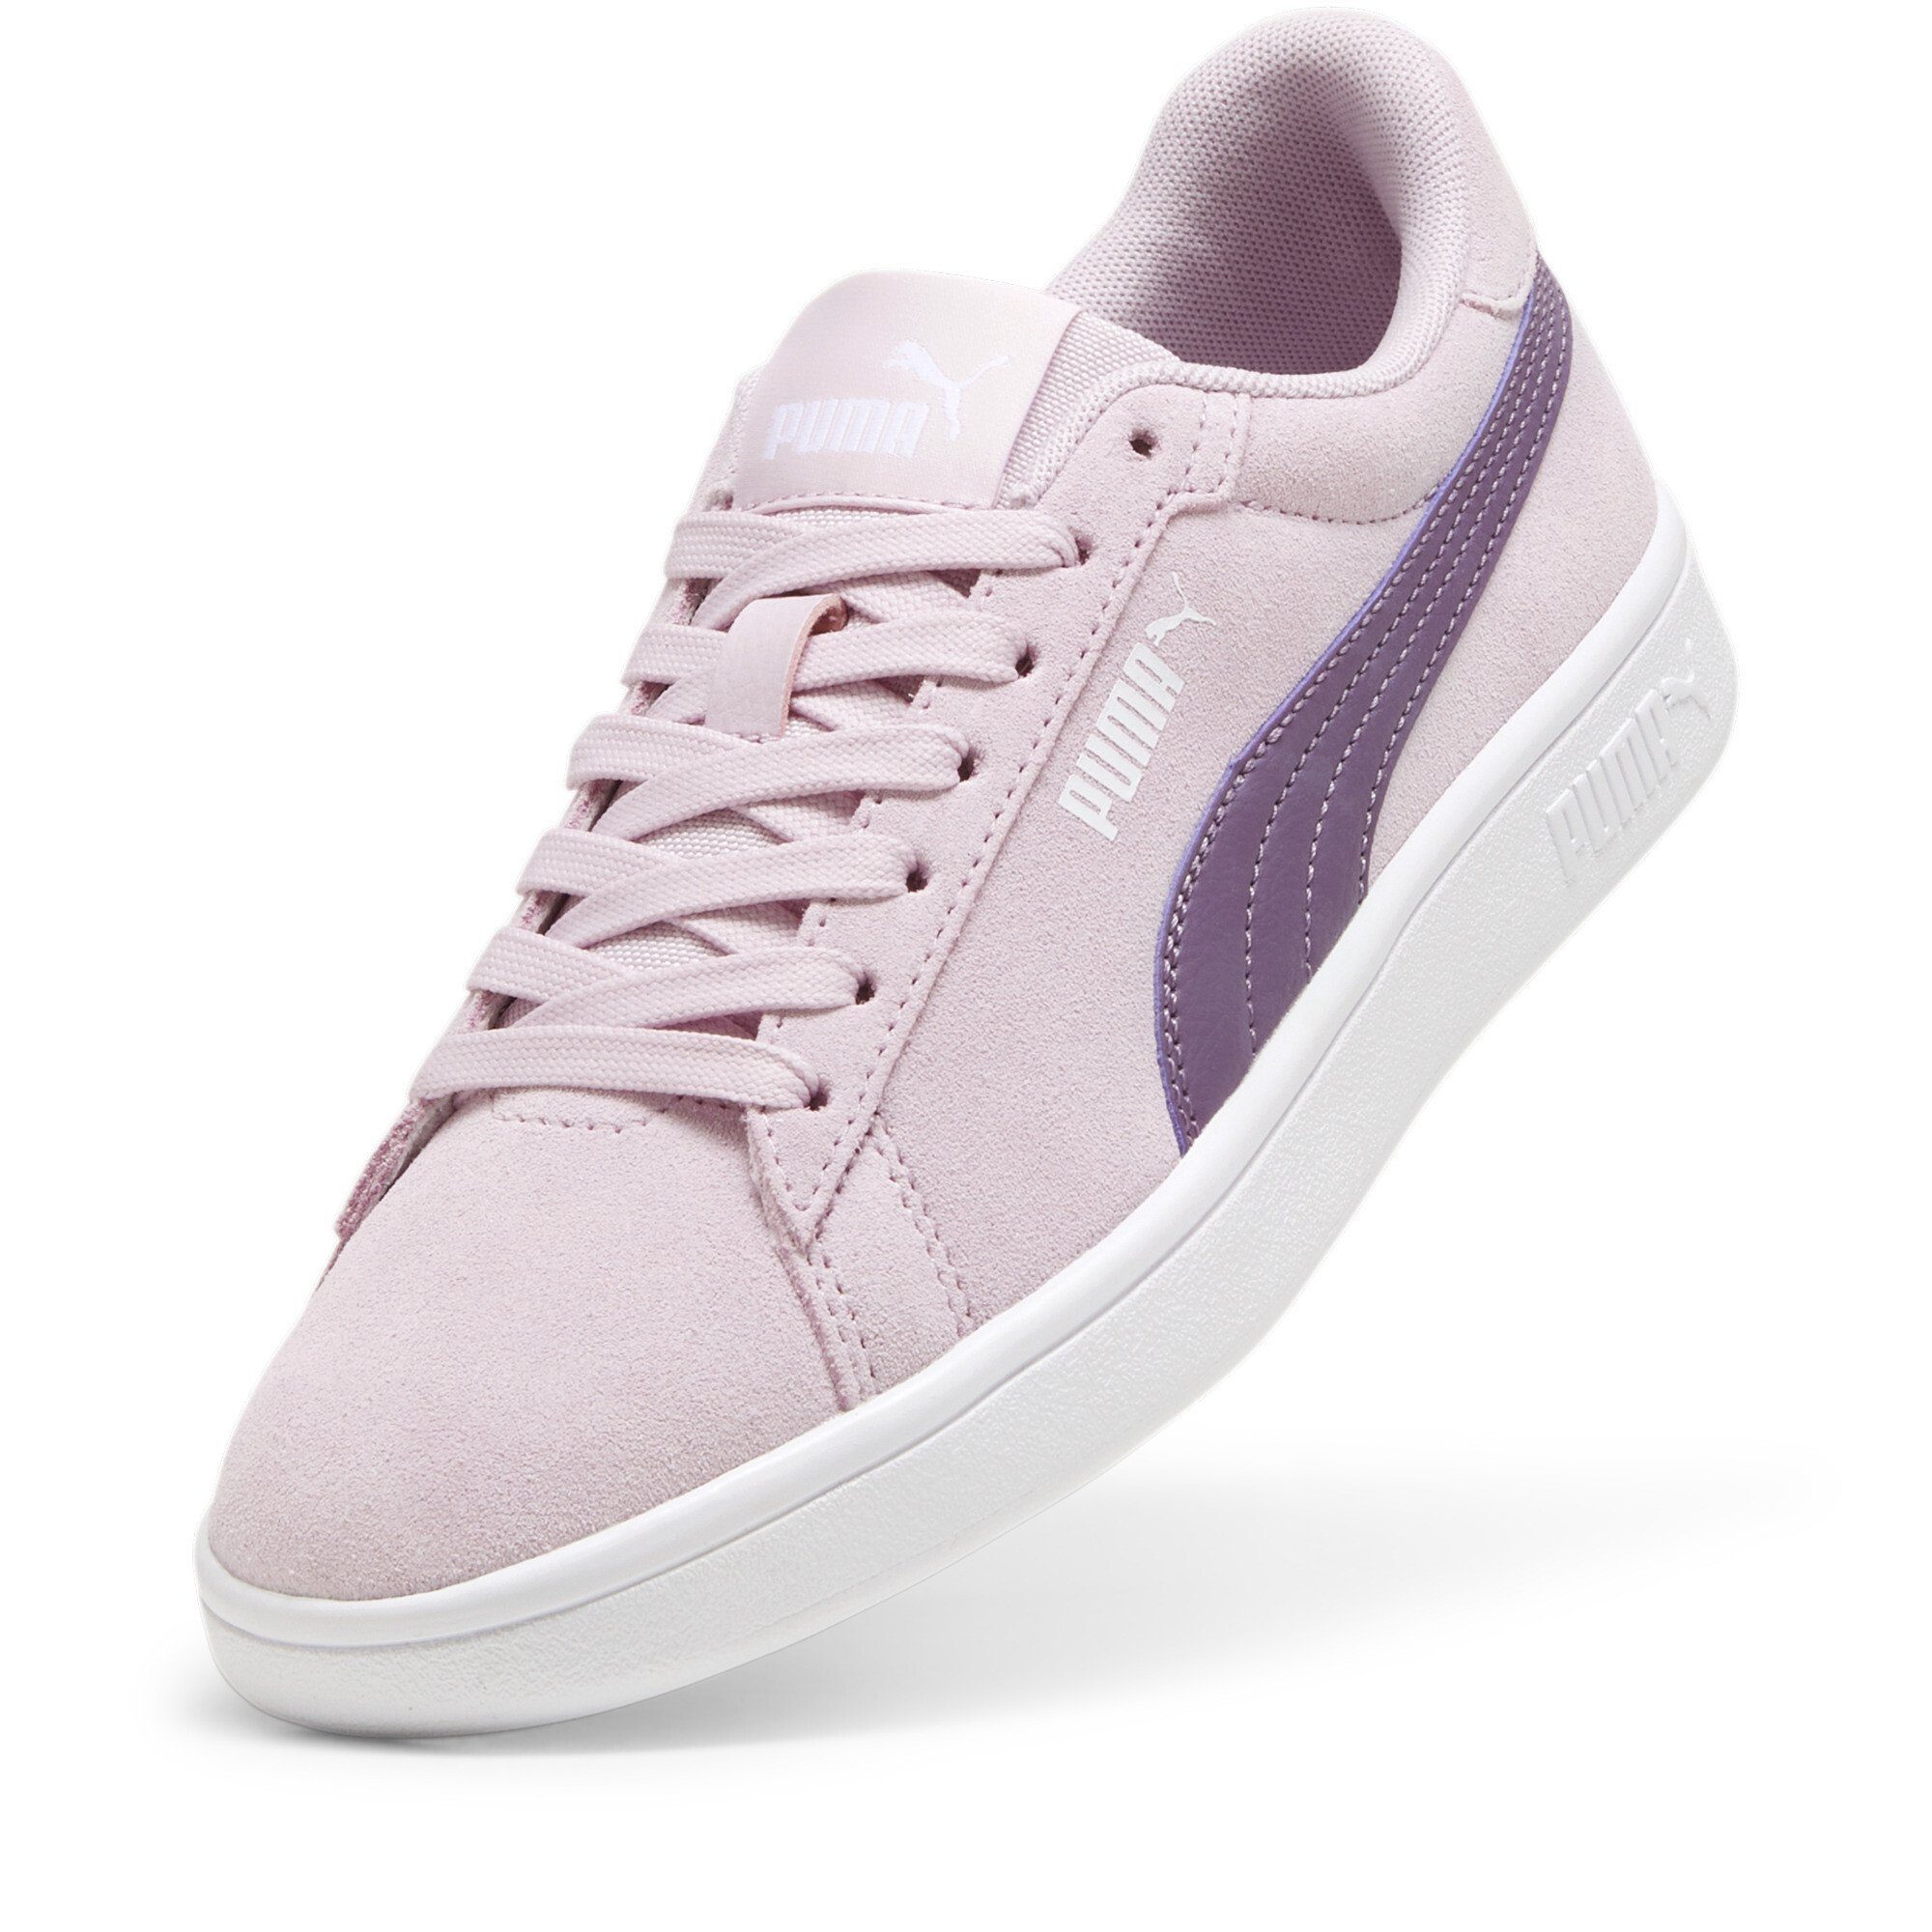 PUMA Smash 3.0 Suede Sneakers Grape Berry Sneaker Mist Crushed Purple White Jugendliche